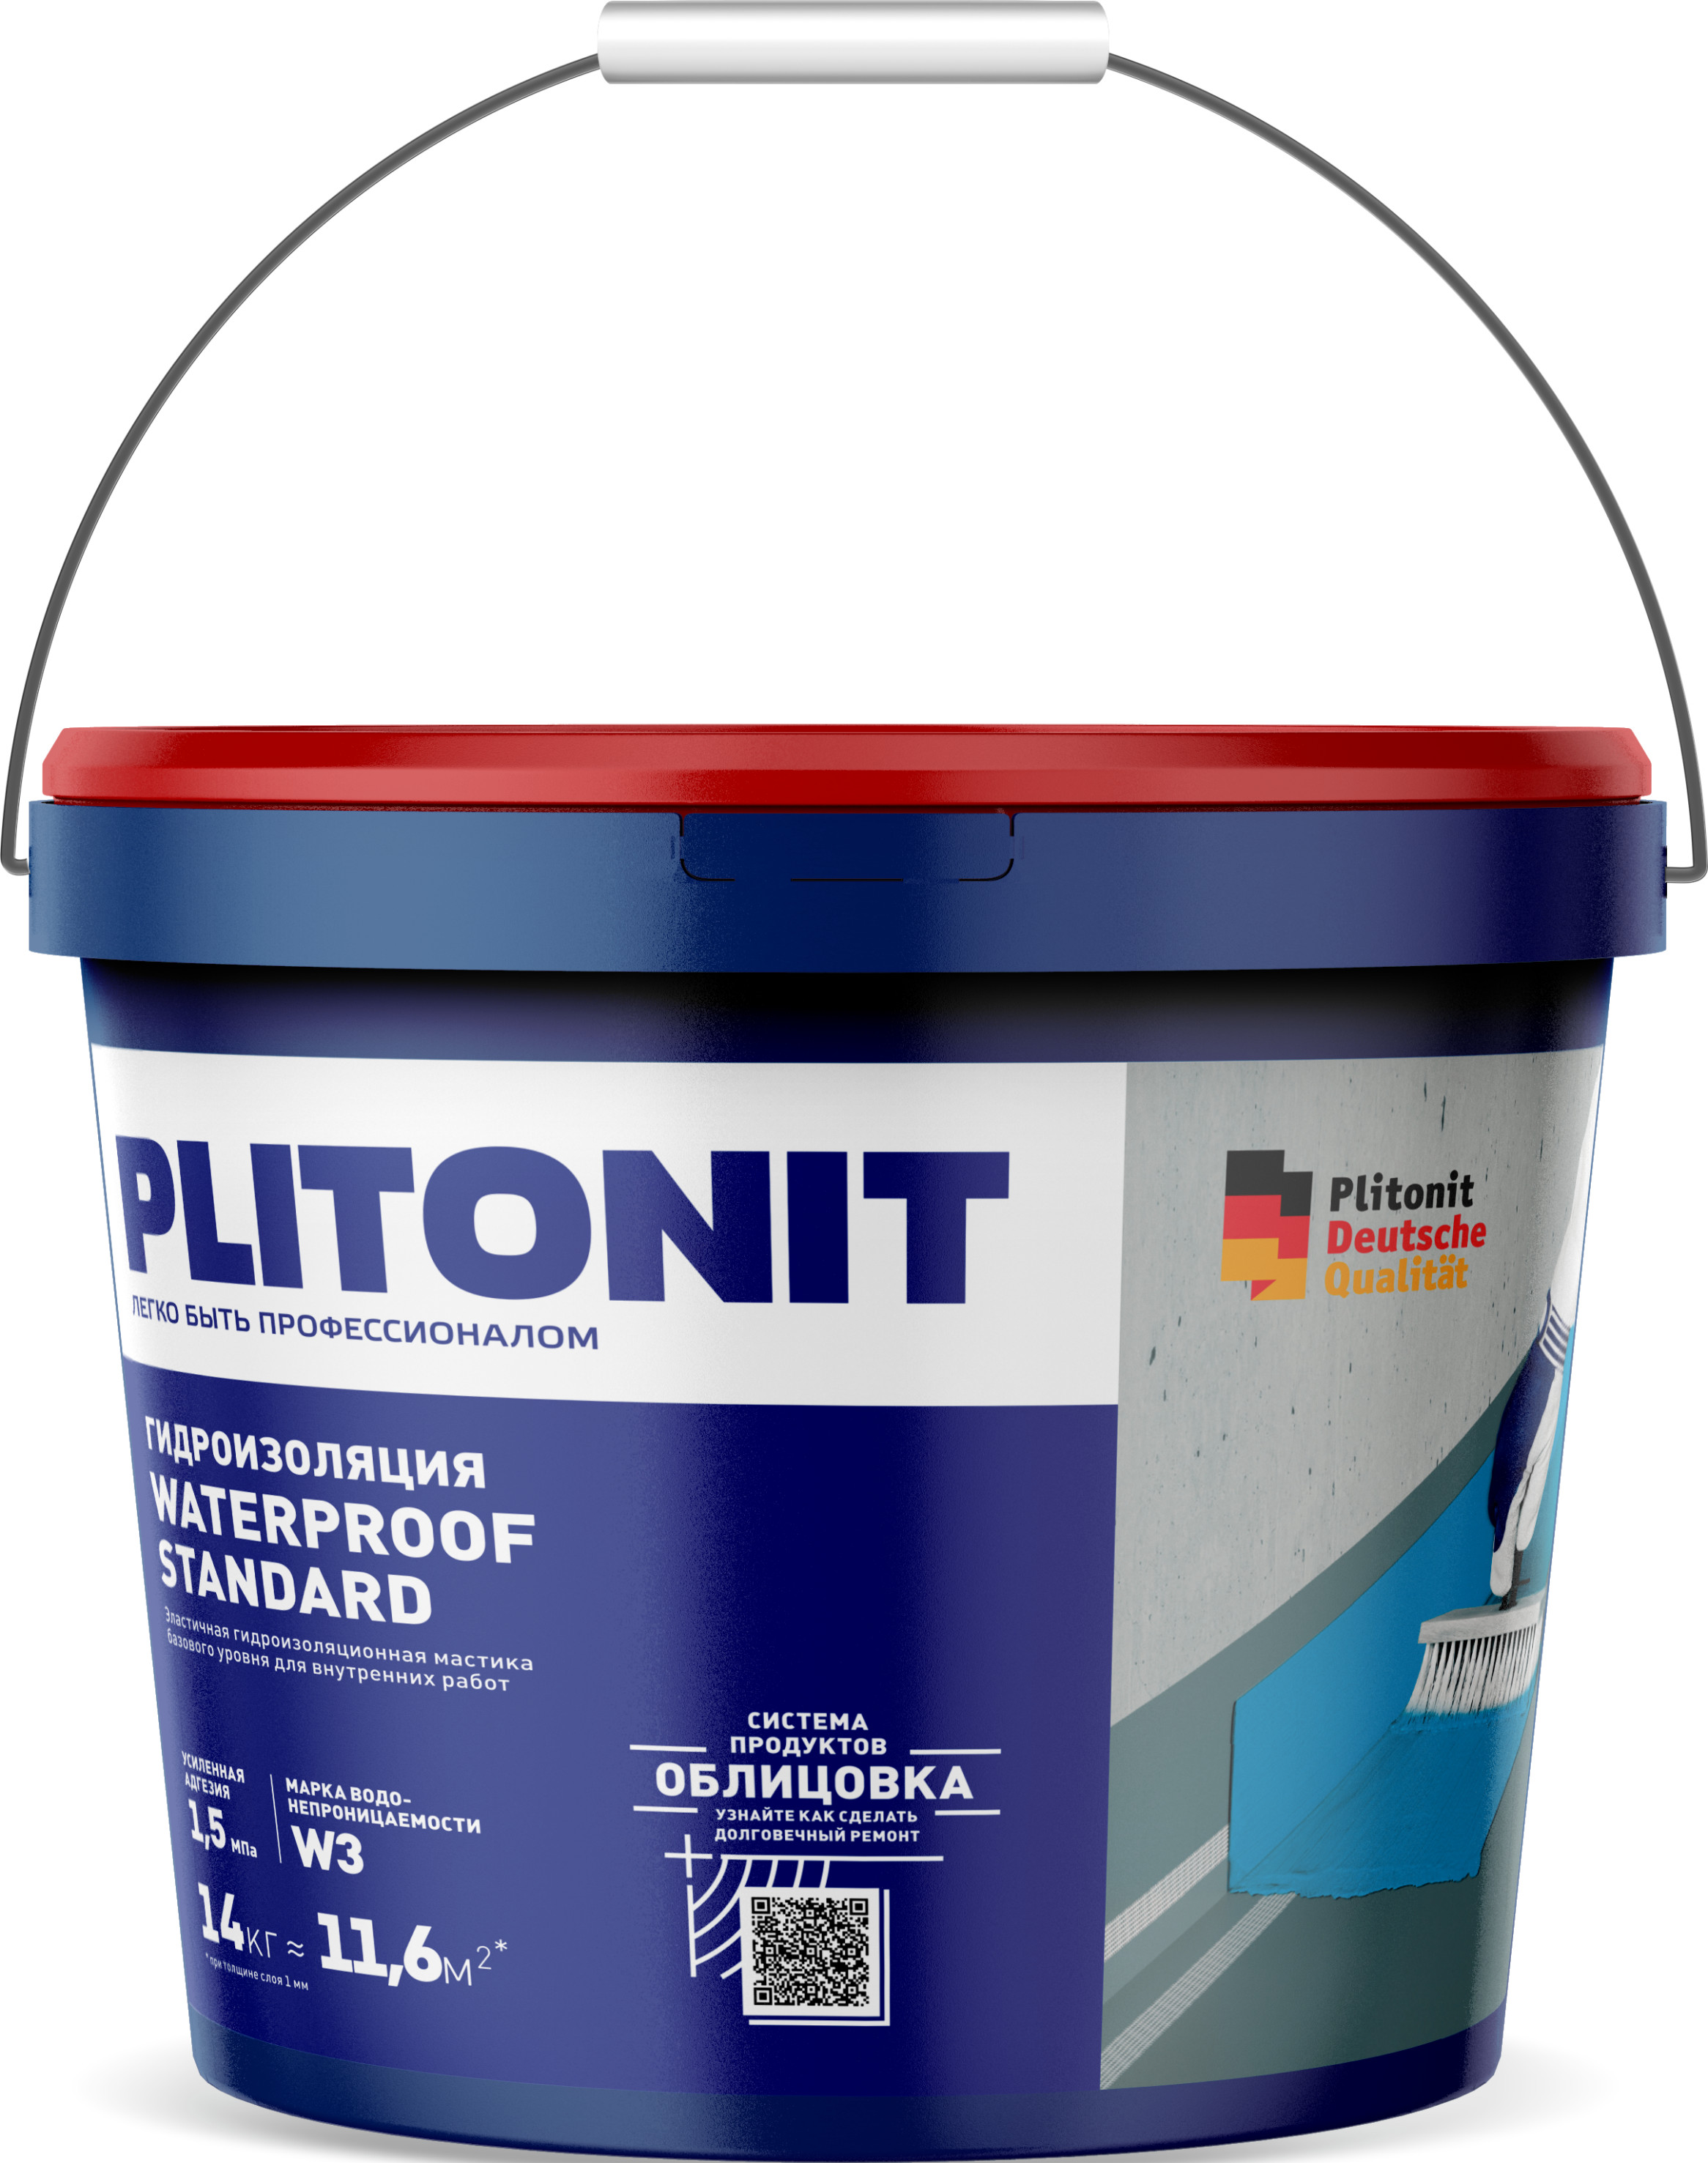 PLITONIT WaterProof Standard - 14 эластичная гидроизоляционная мастика базового уровня для внутренних работ 